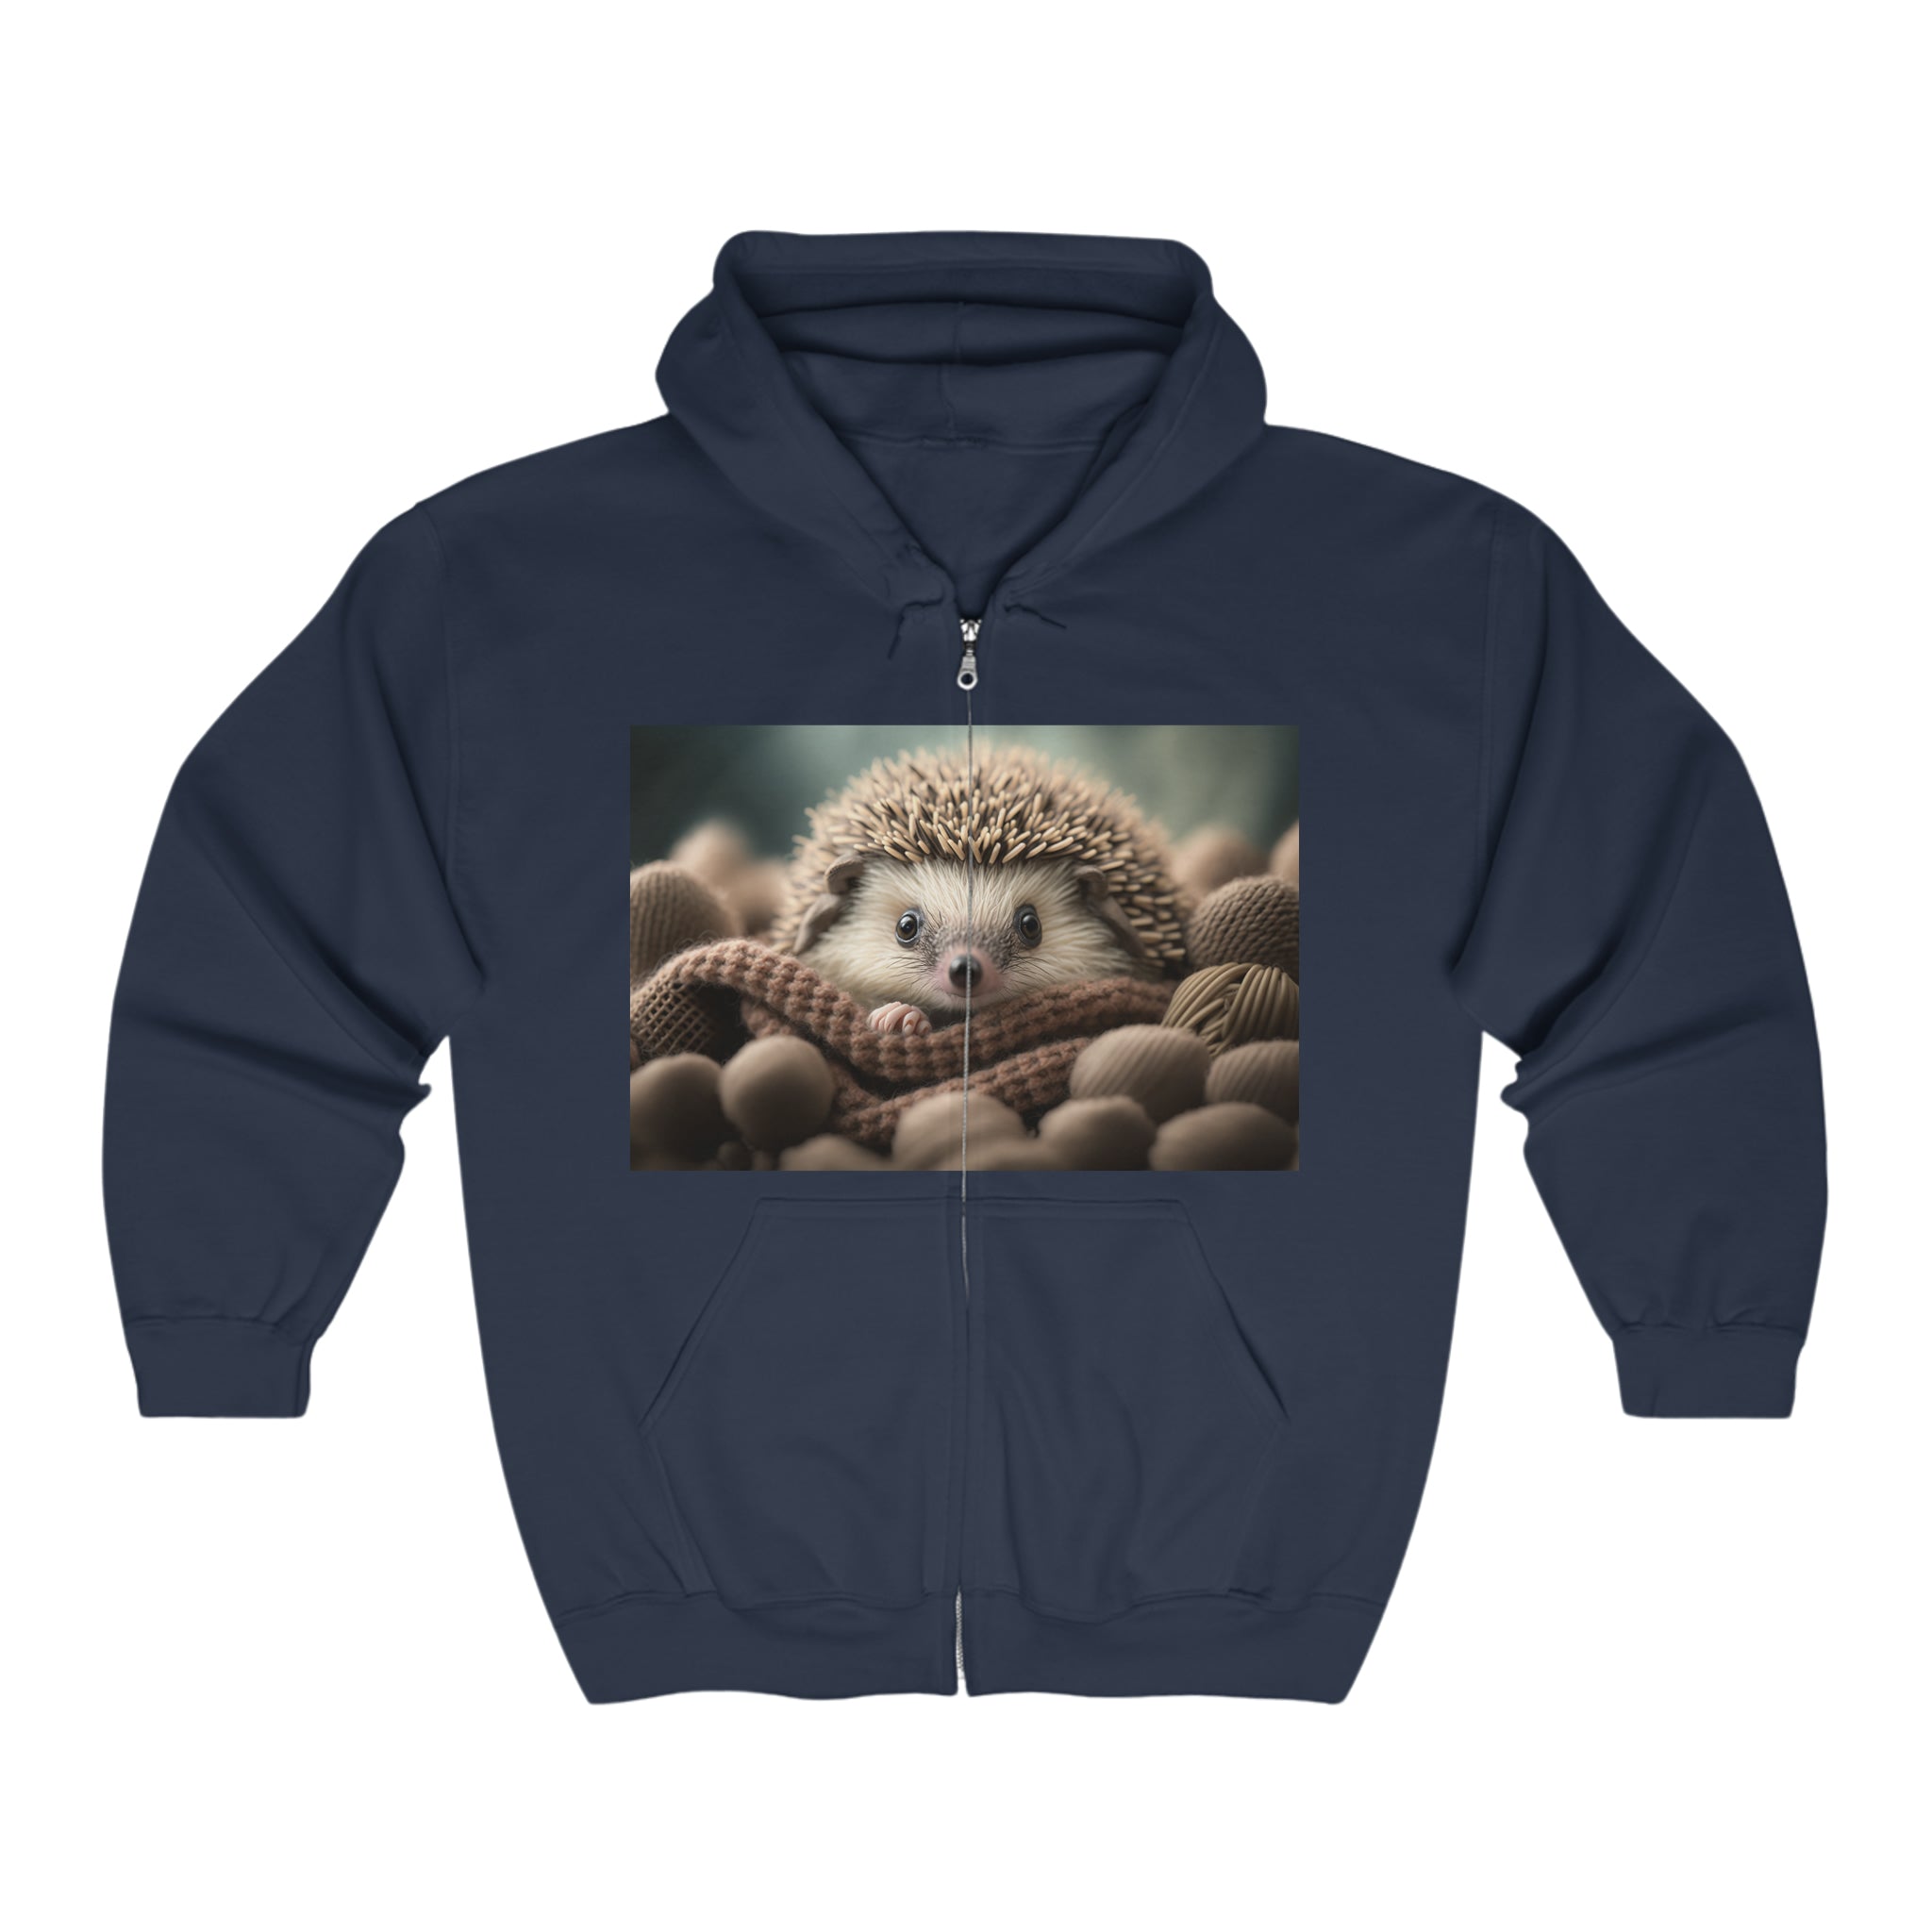 Unisex Heavy Blend™ Full Zip Hooded Sweatshirt - Baby Animals - Hedgehog